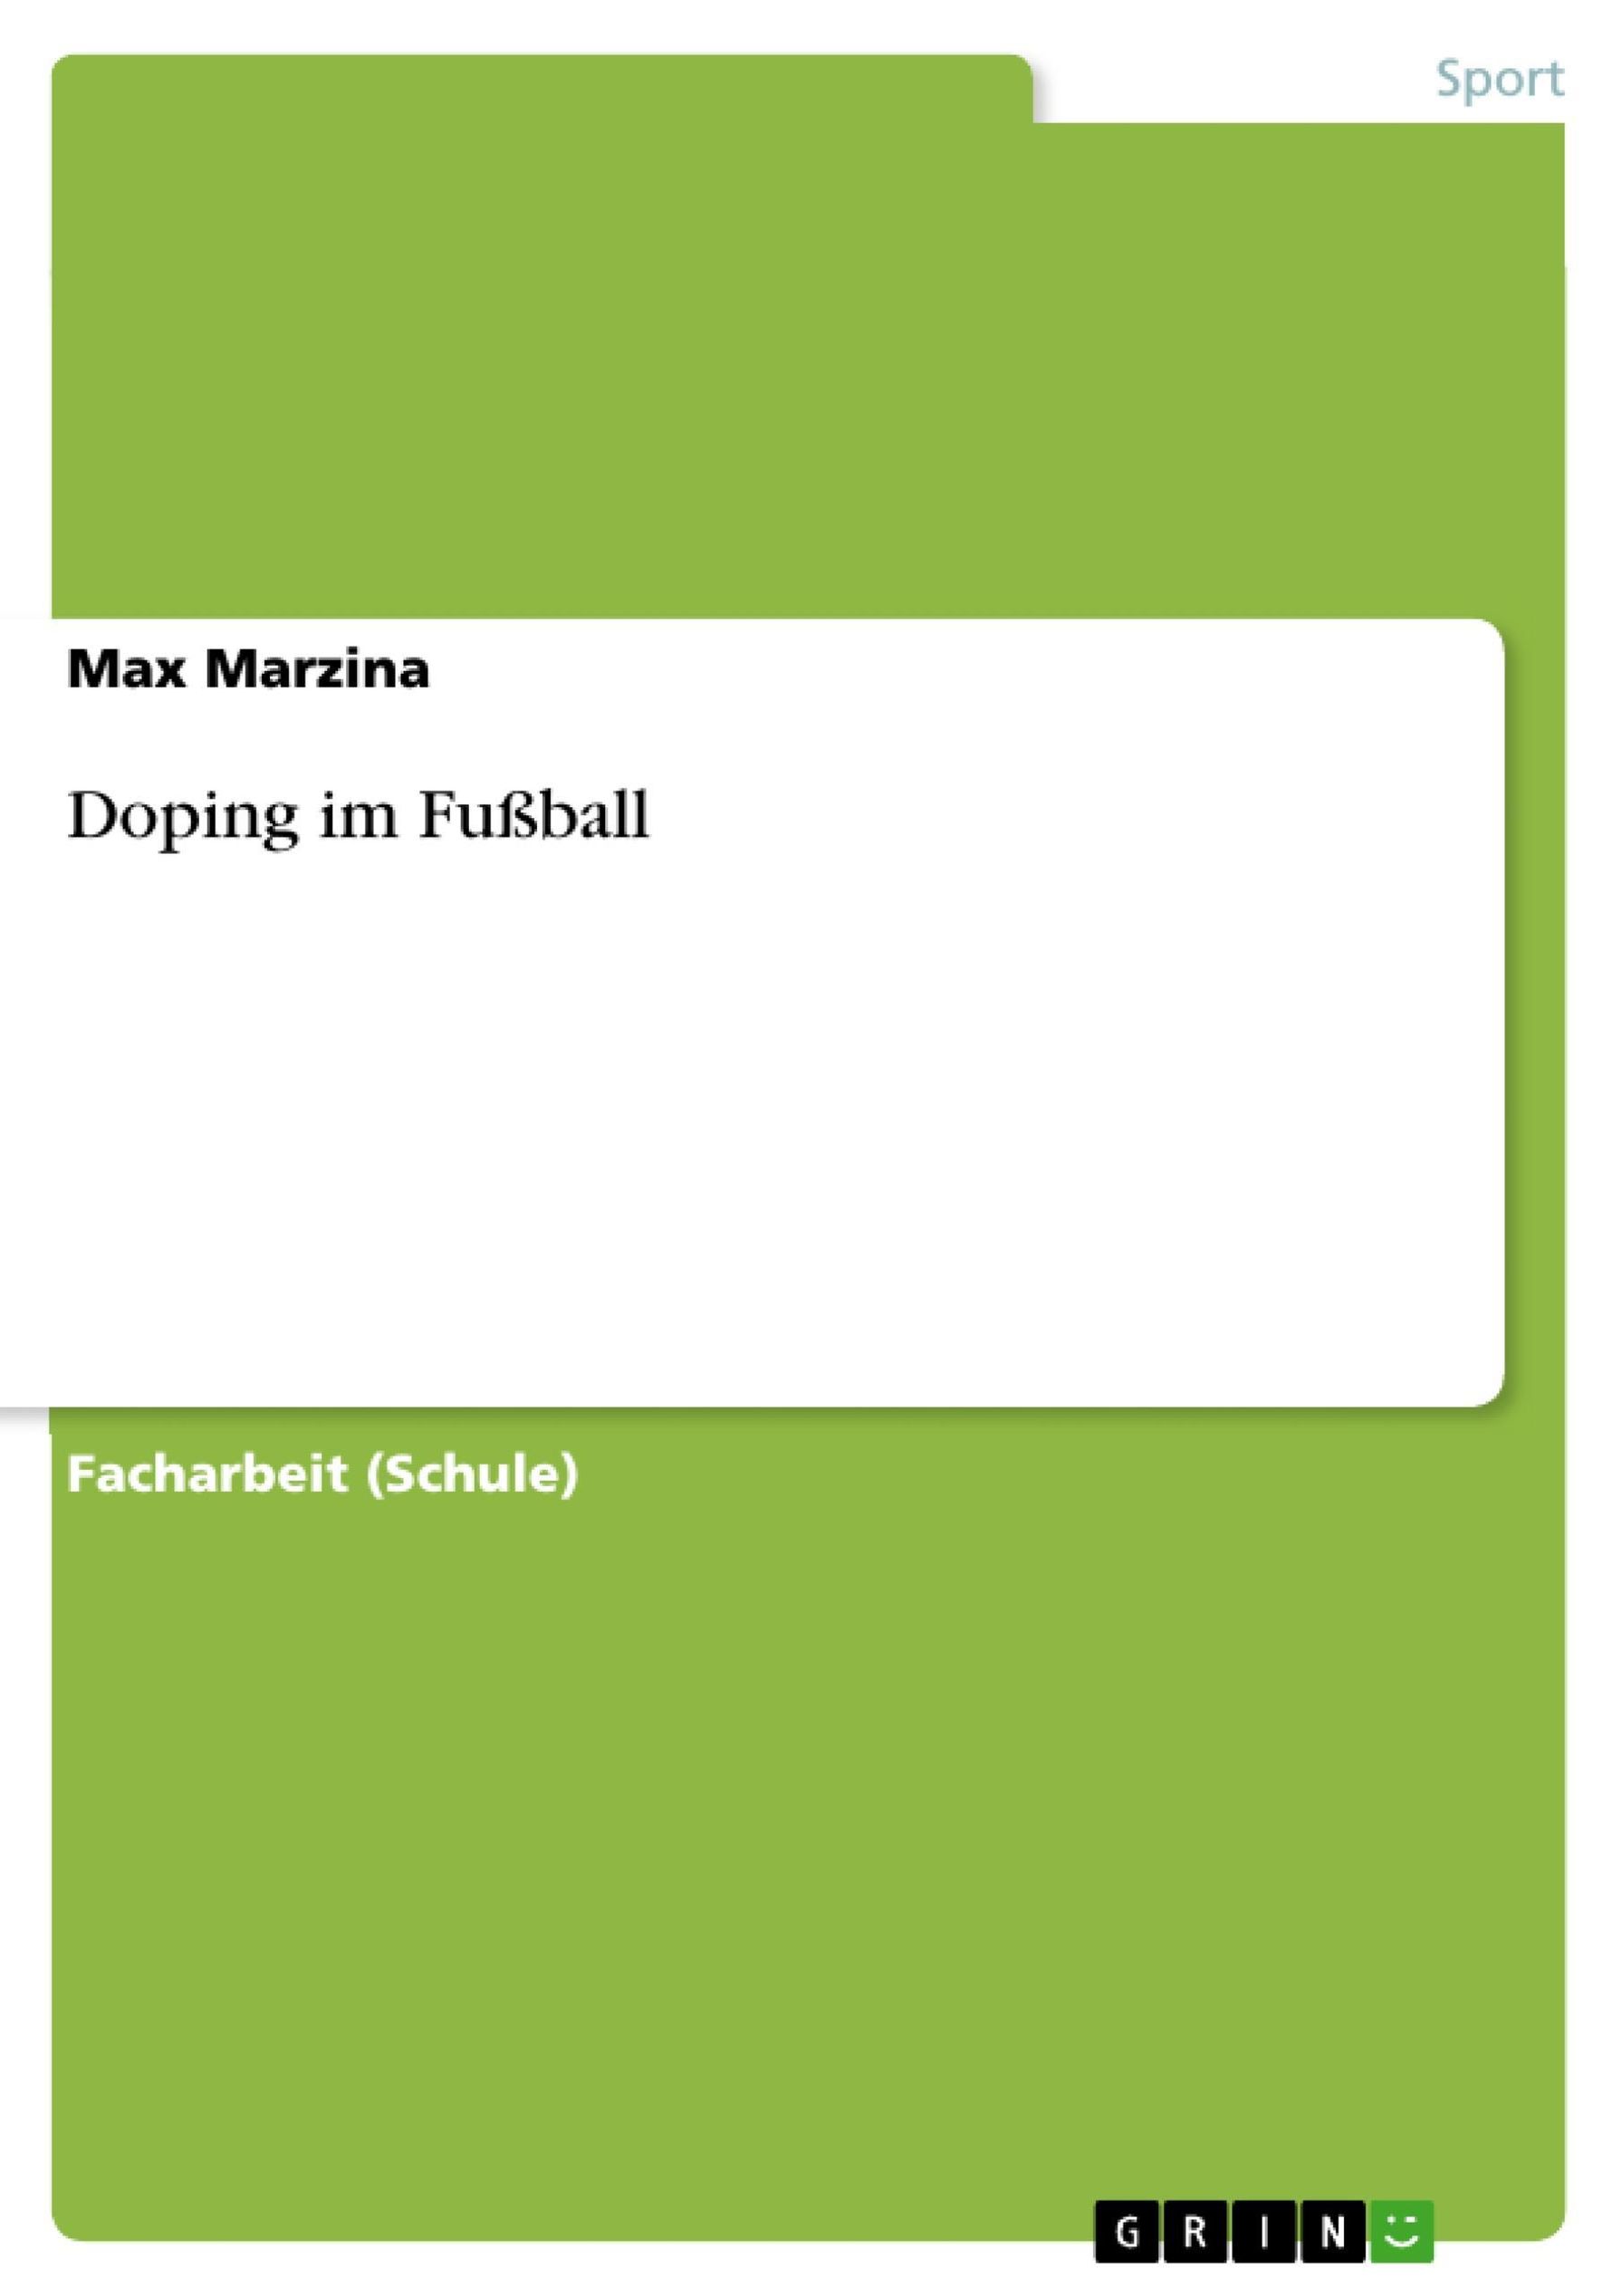 Doping im Fußball eBook v. Max Marzina | Weltbild